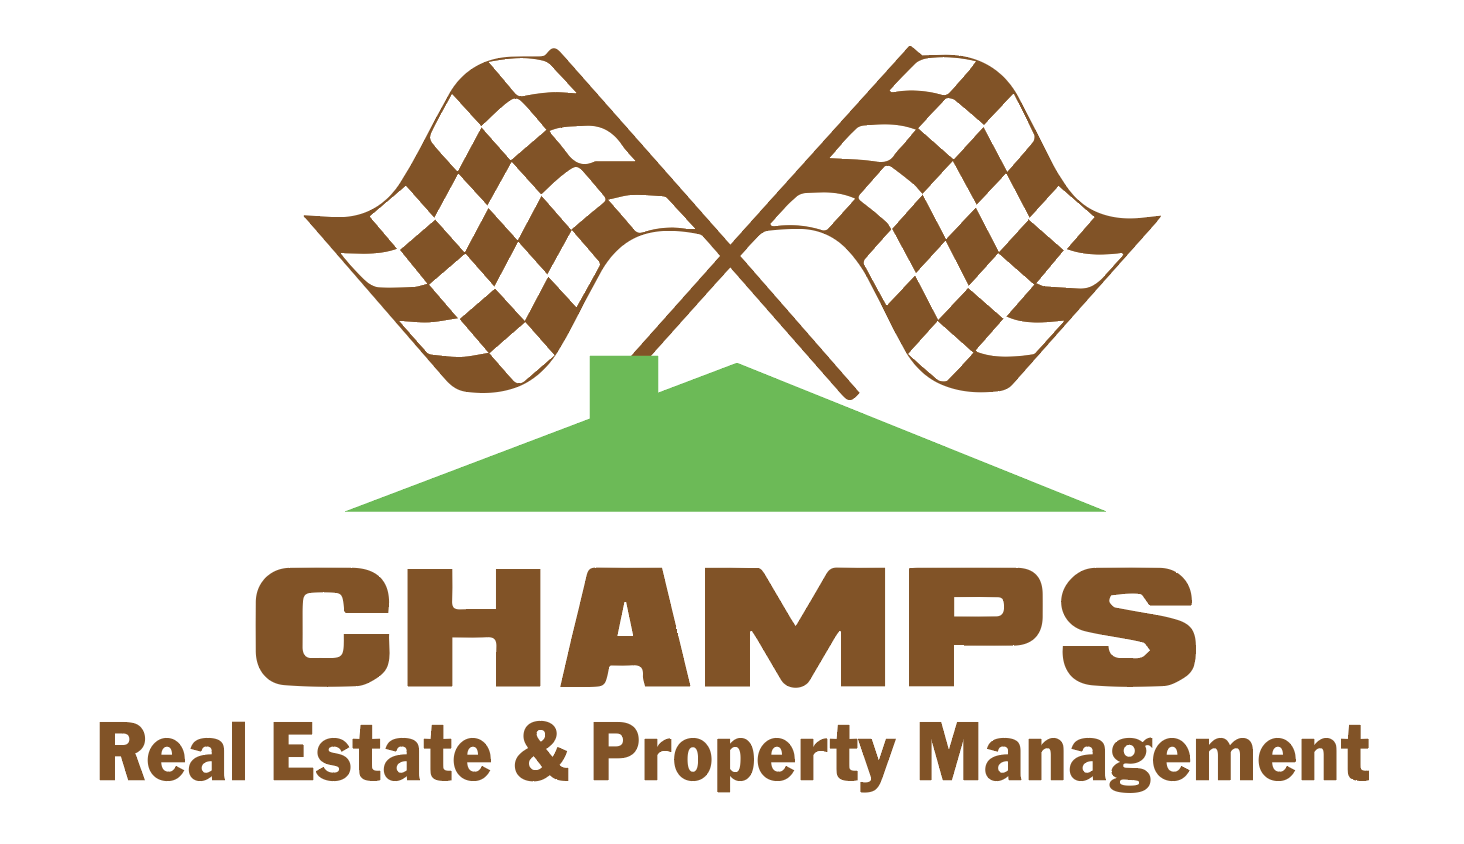 CHAMPS REAL ESTATE & PROPERTY MANAGEMENT logo